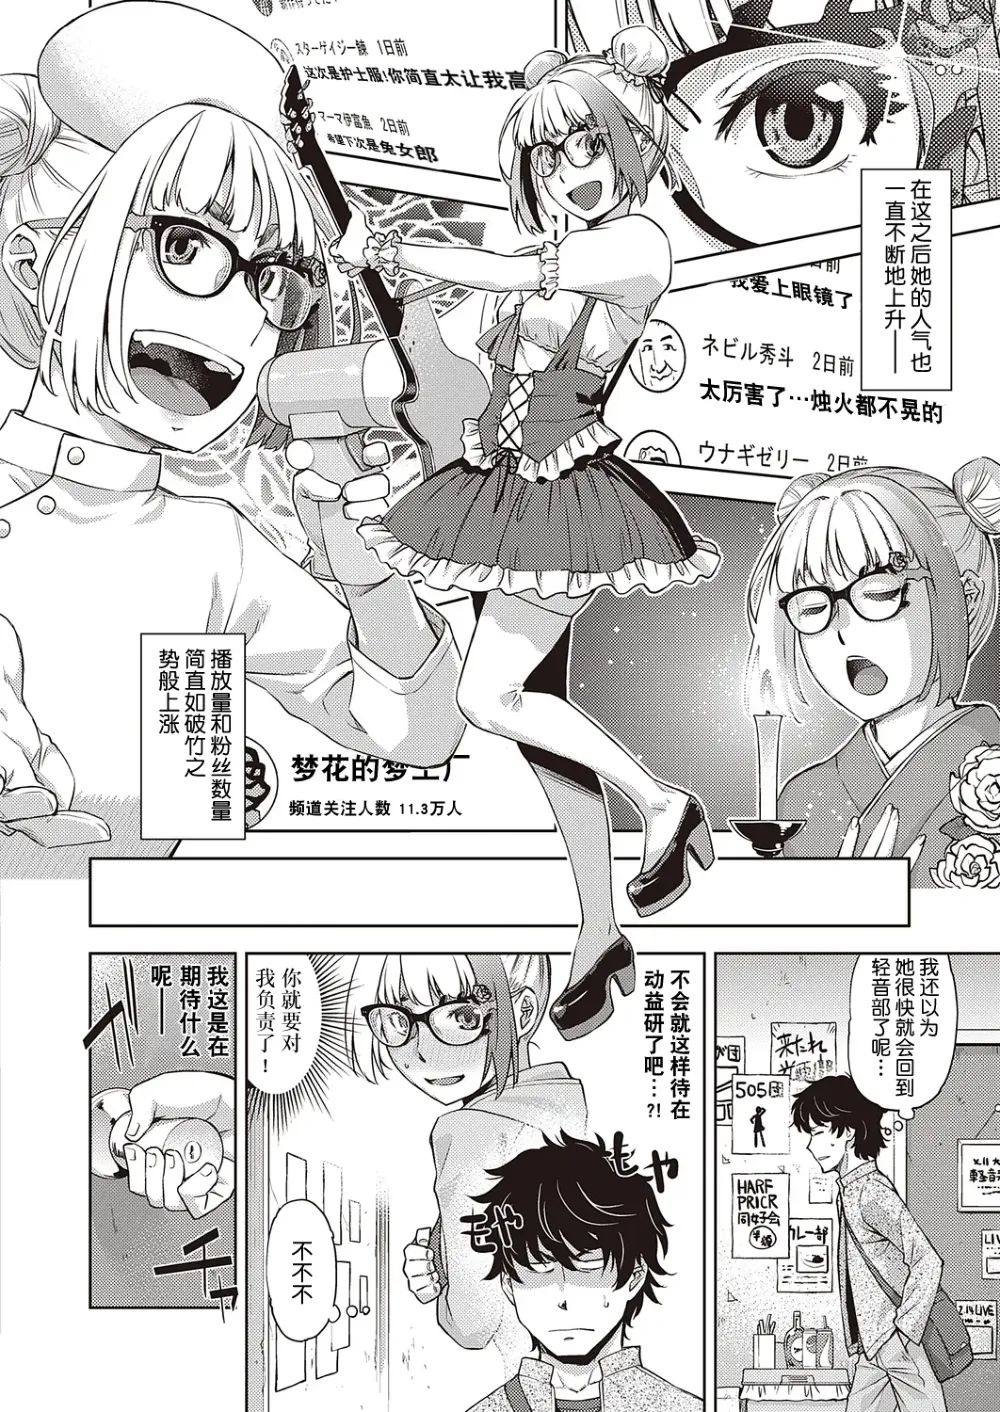 Page 8 of manga Houkago Megane Club